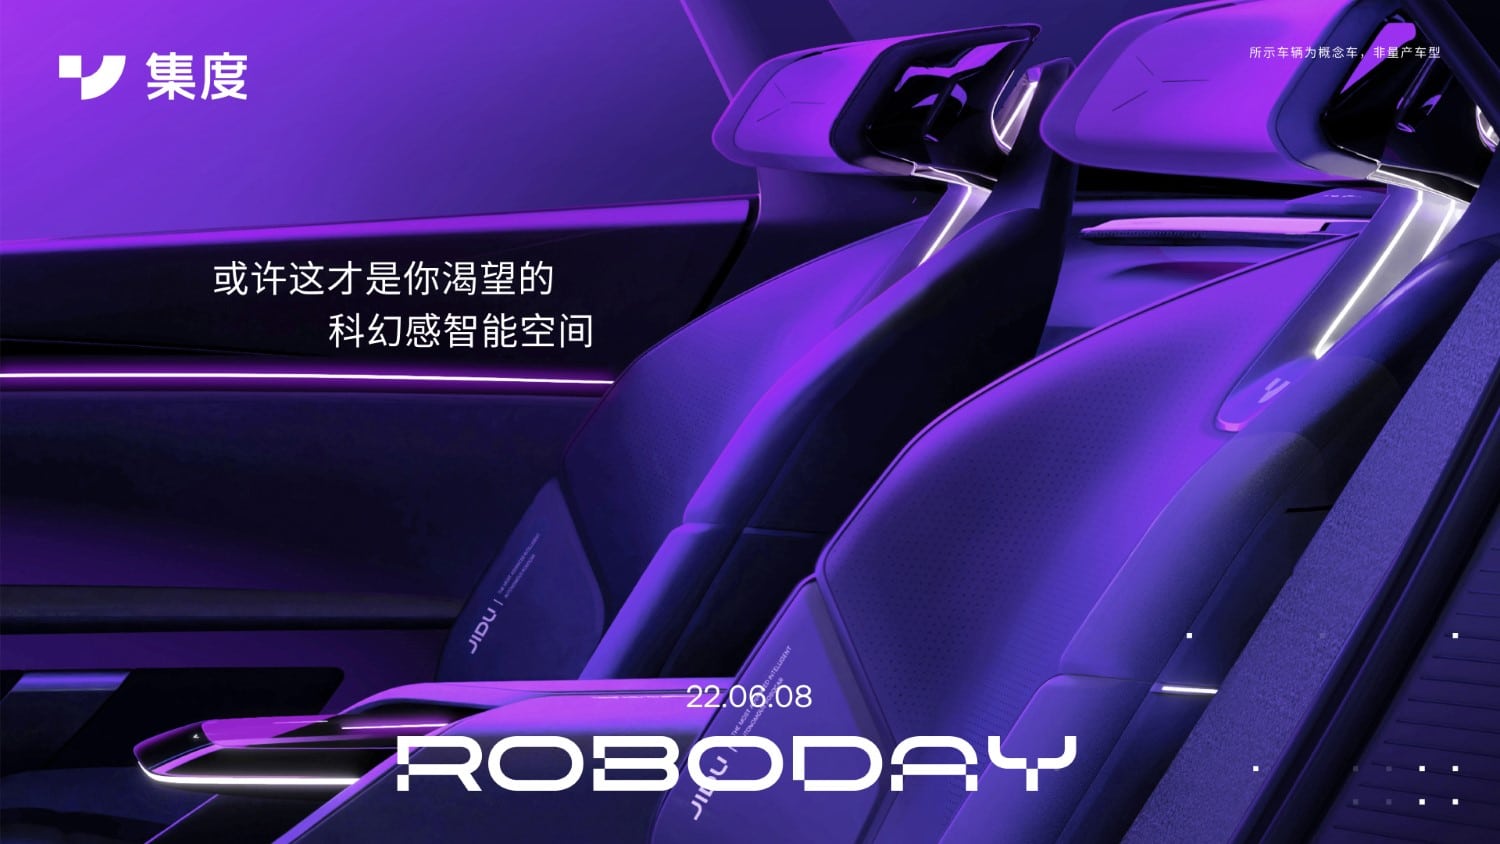 Jidu teases interior design of its robot car concept-CnEVPost